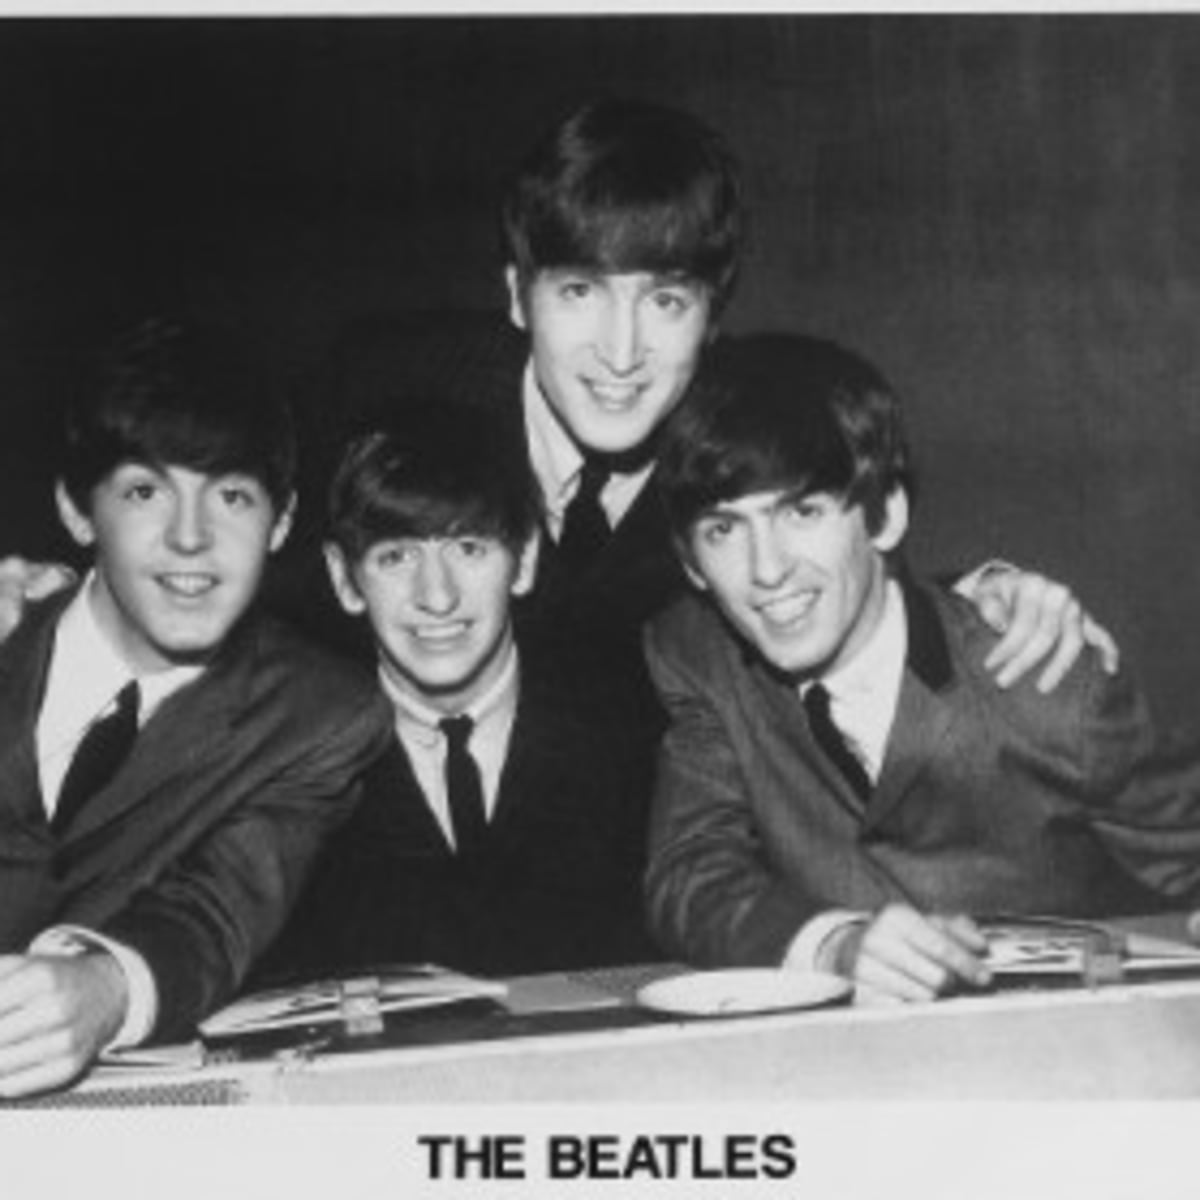 THE BEATLES AT JFK 1964 8x10 Photograph Rock Pop Icons Fab Four AUTOGRAPHS RP 